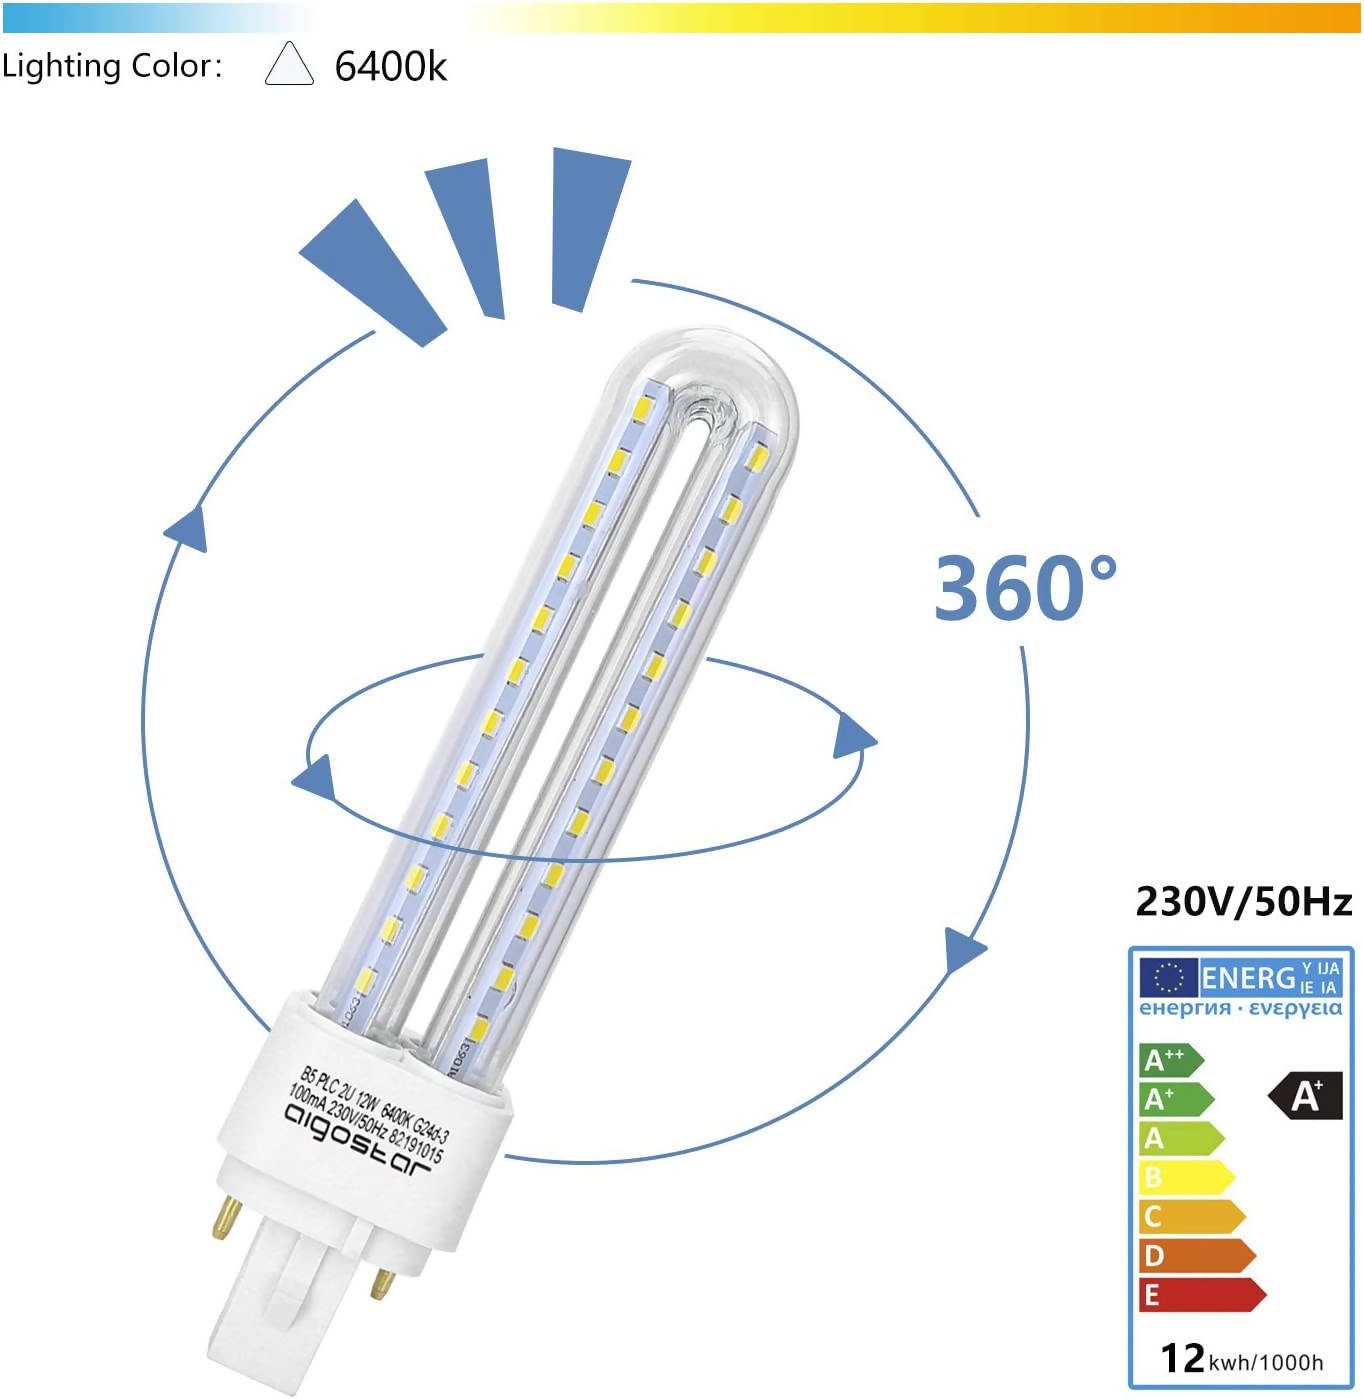 LED Cool White 15 W PLC G24 Light Bulb Mains Bulb Lamp 6400 K 1800 Lumen Beam Angle 360 Degree 2U Bulbs 5 Pieces Energy Saving